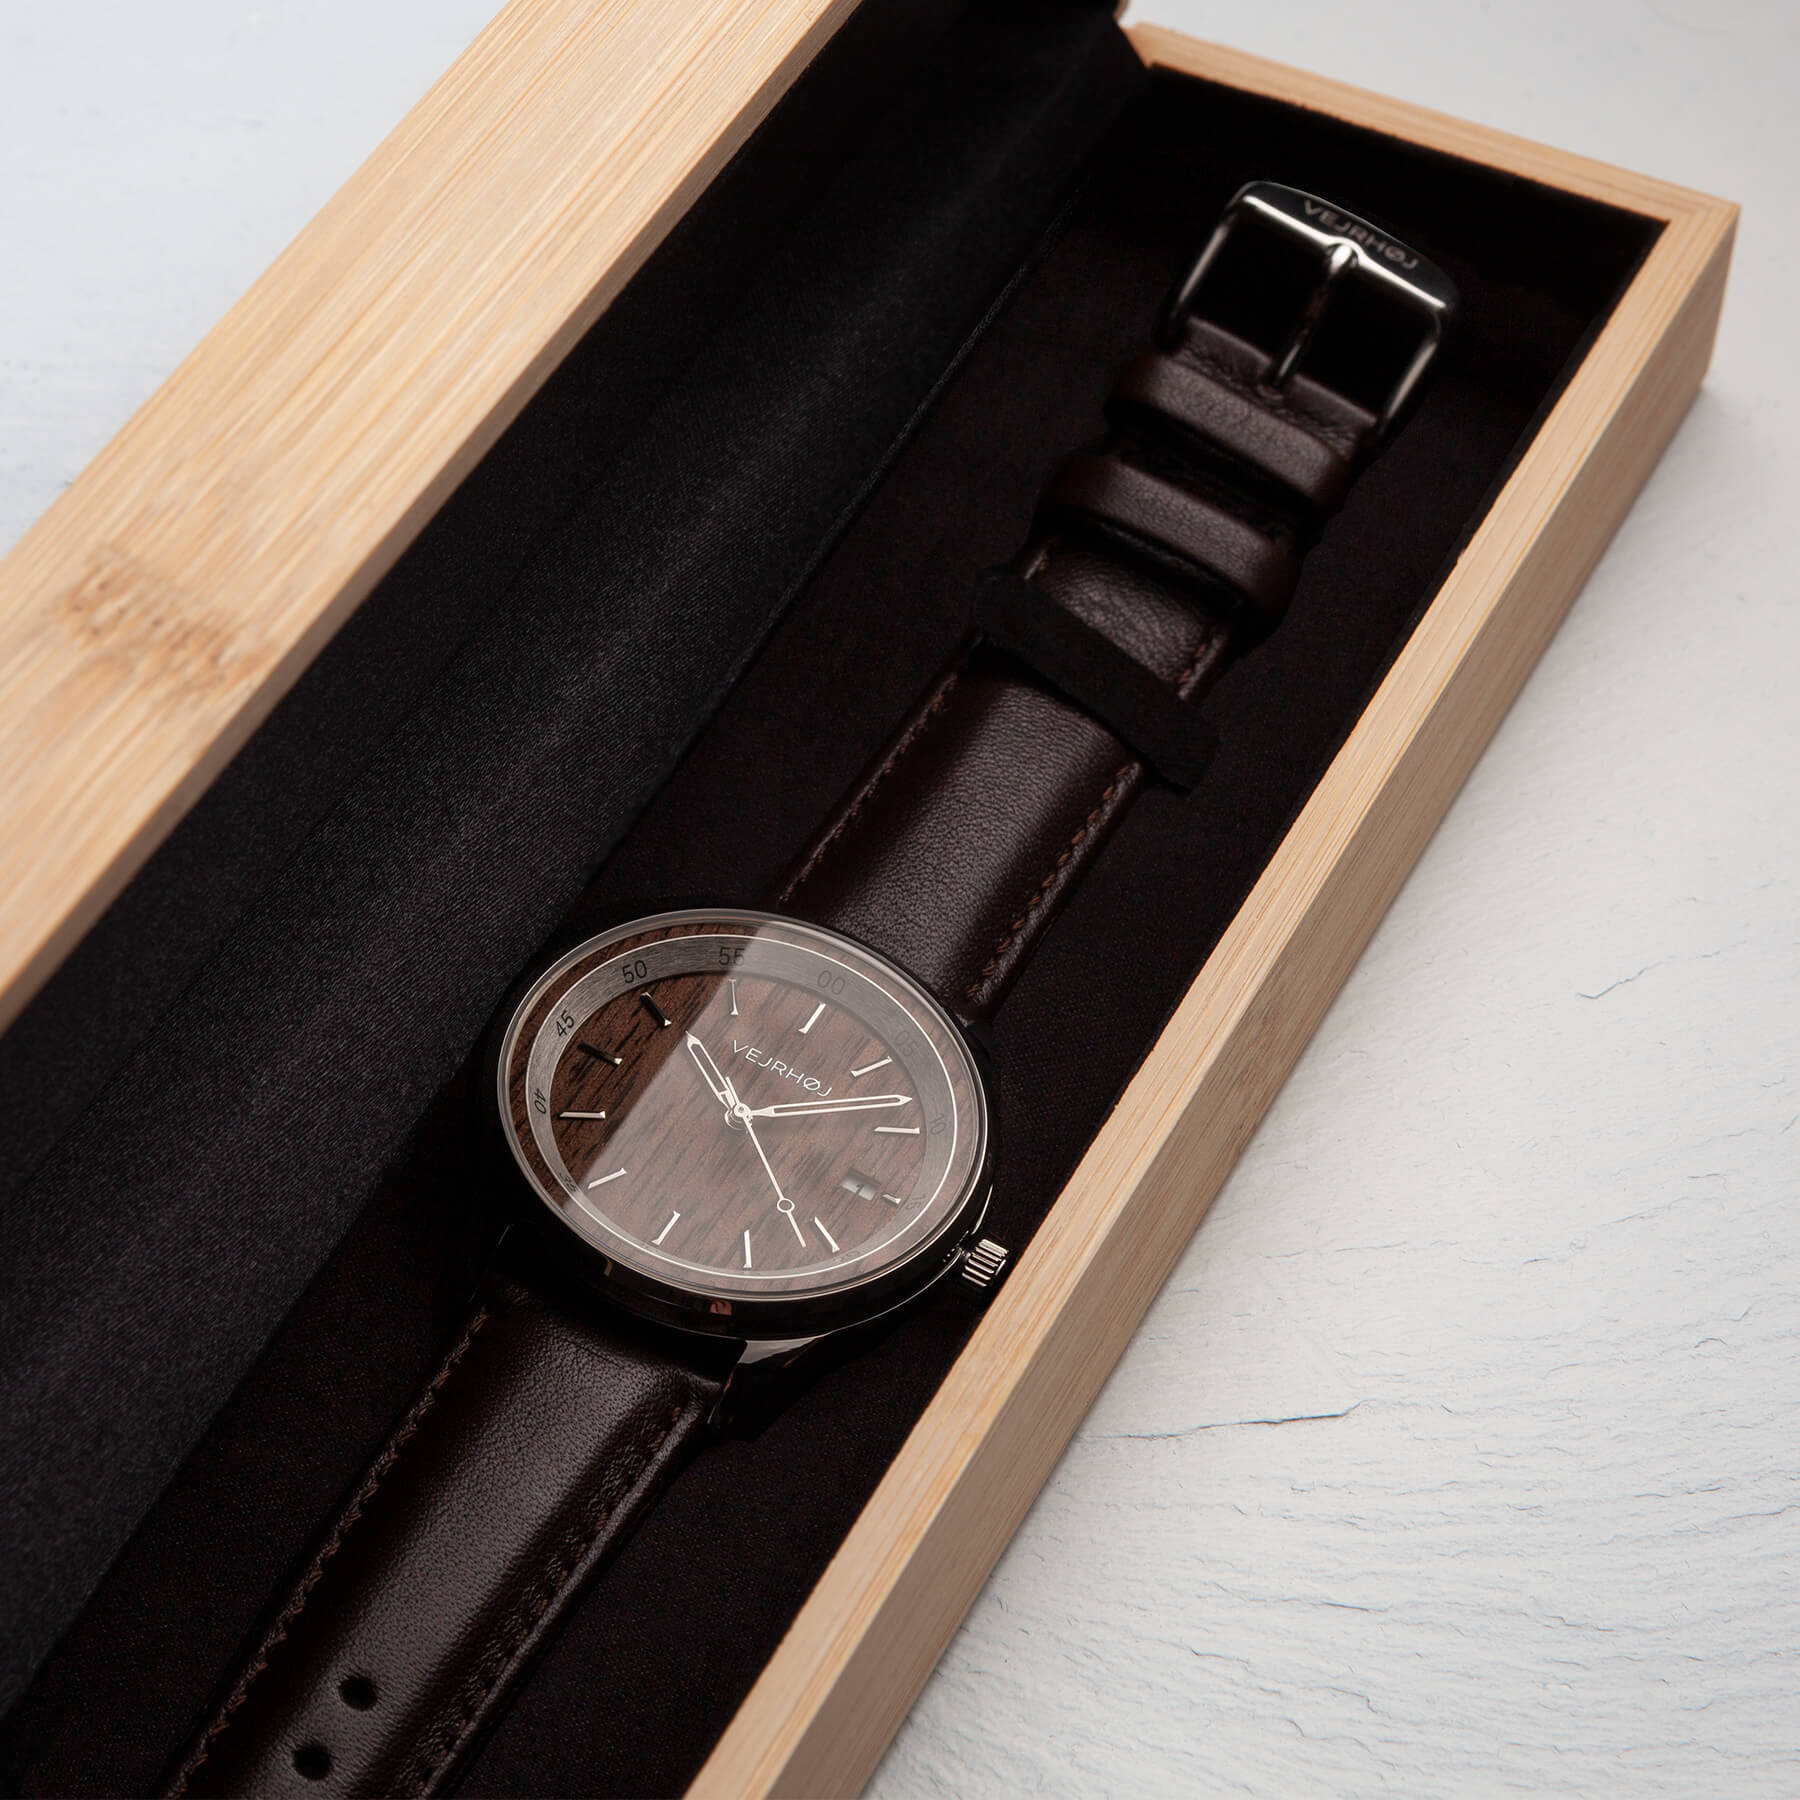 A04 automatic walnut wood watch from VEJRHØJ in a wooden box